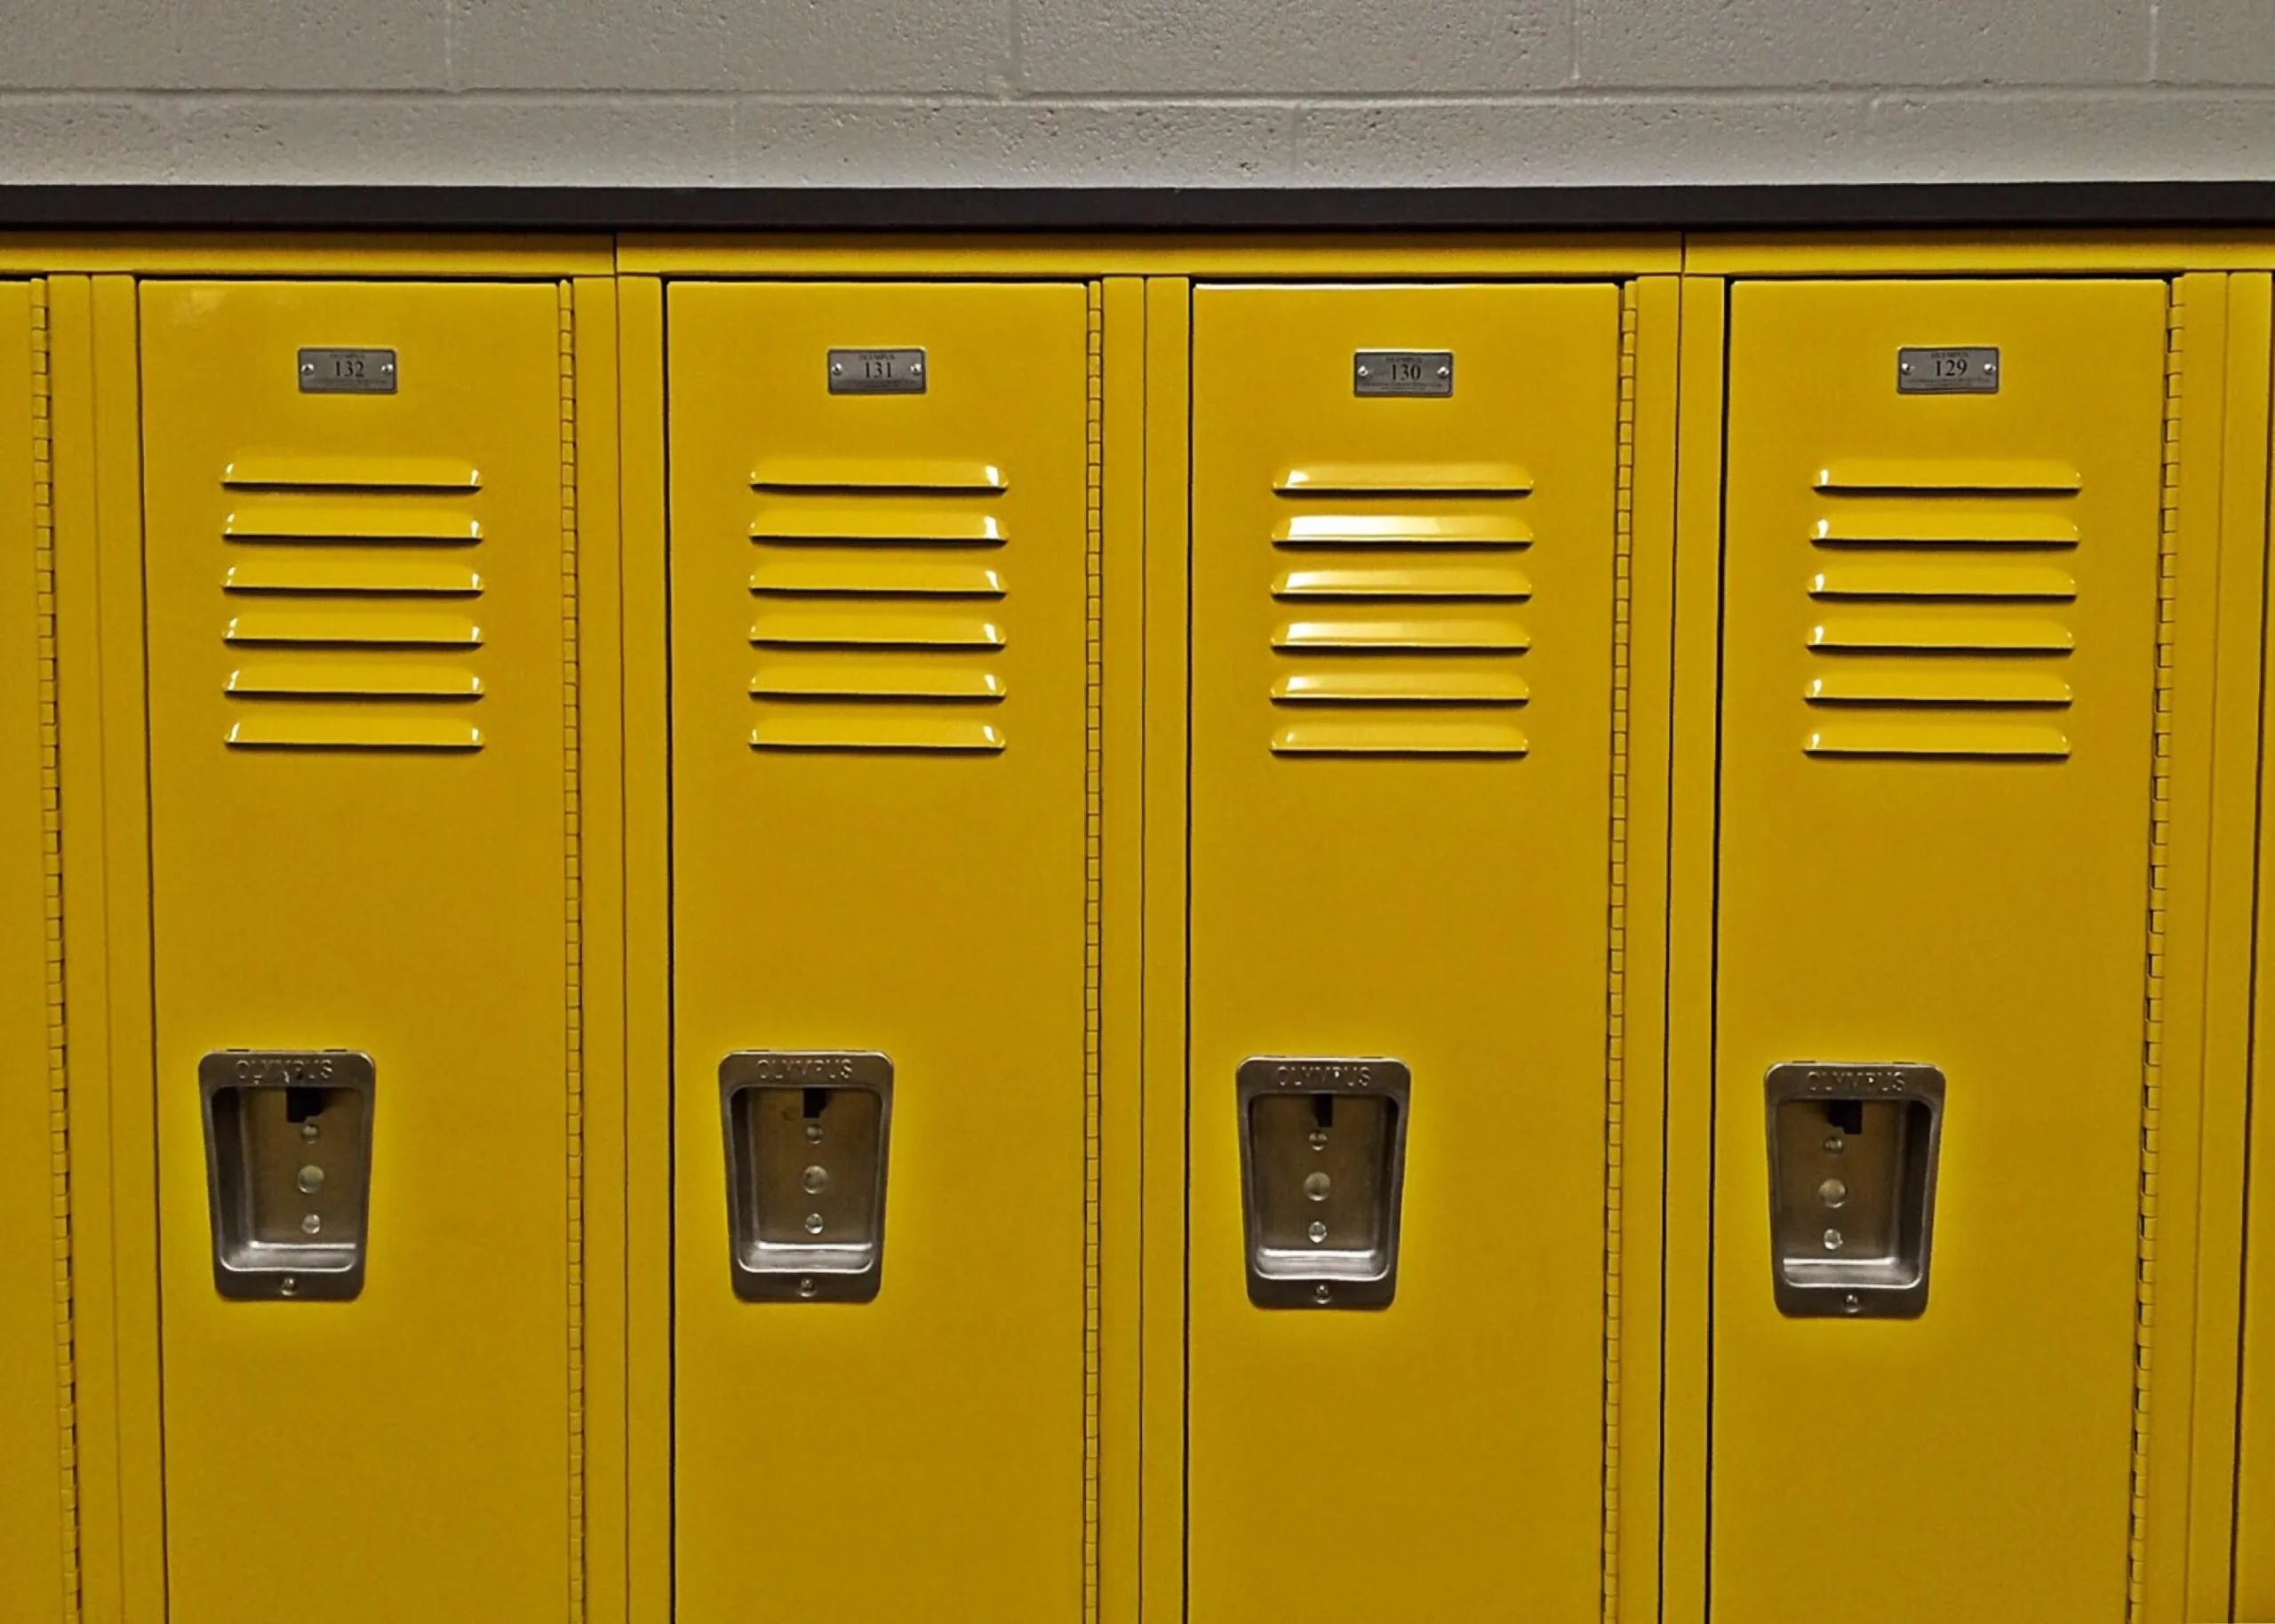 school regulations kept with  alarm lock access control